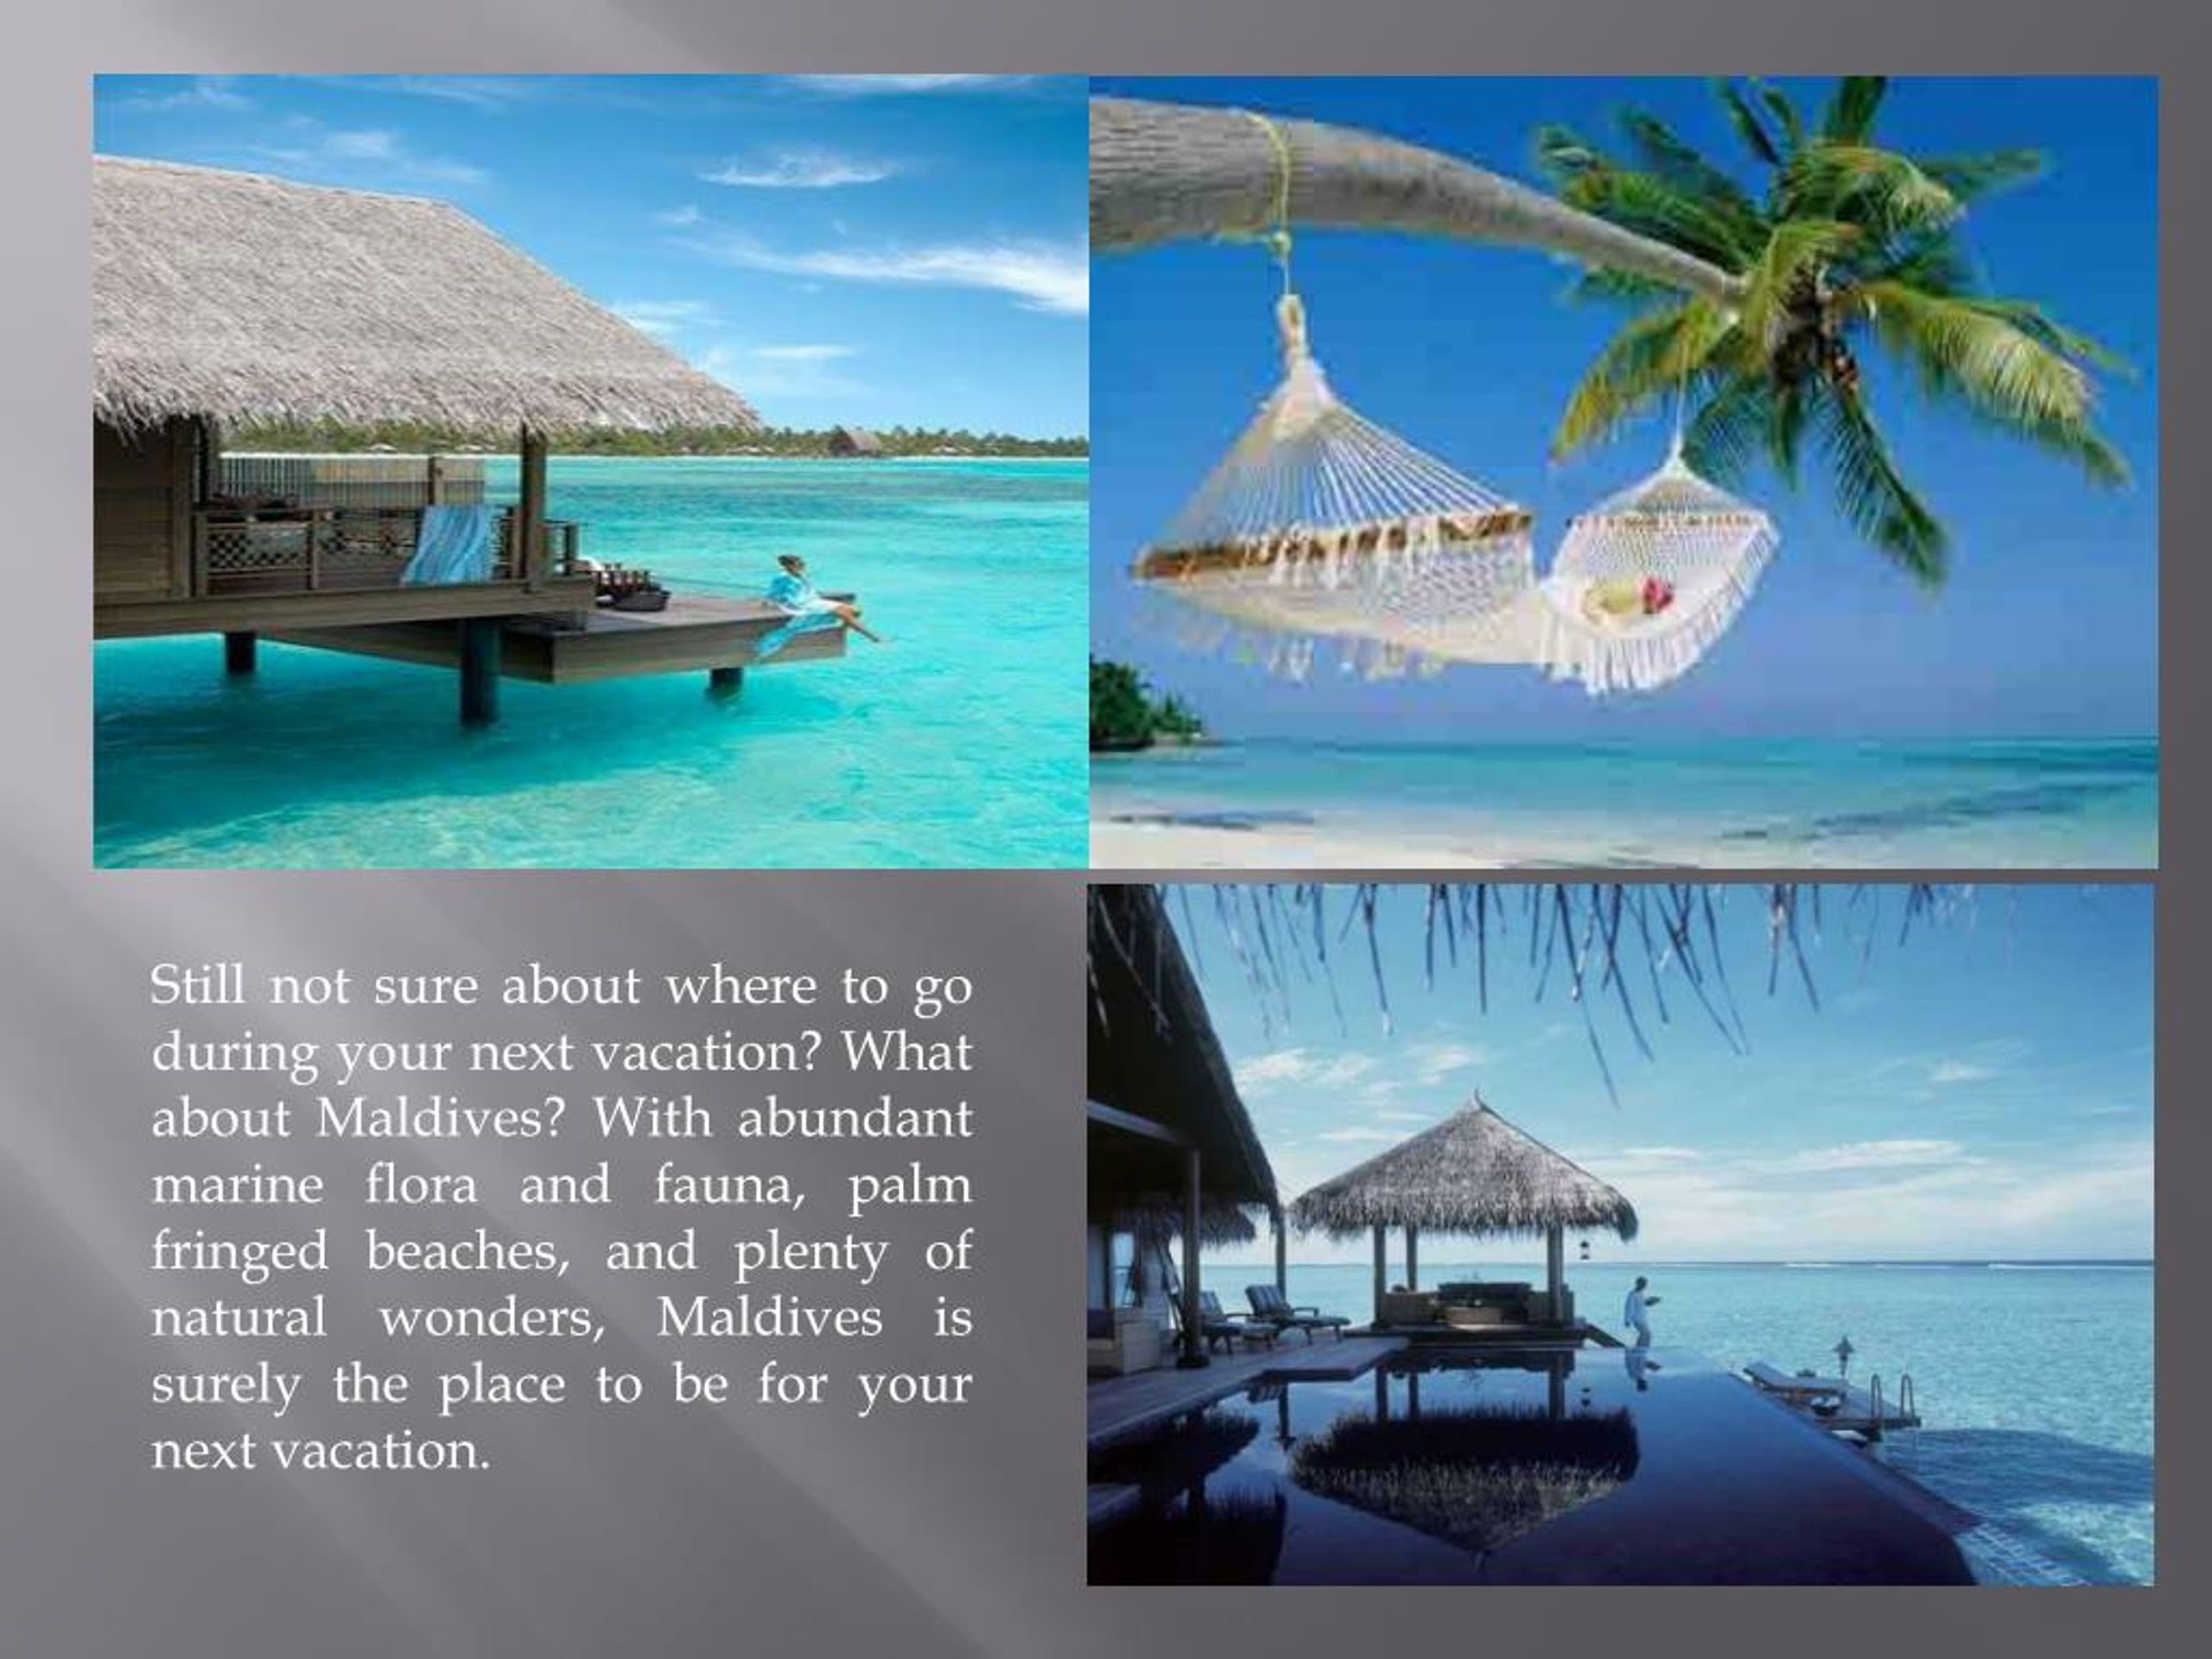 maldives presentation